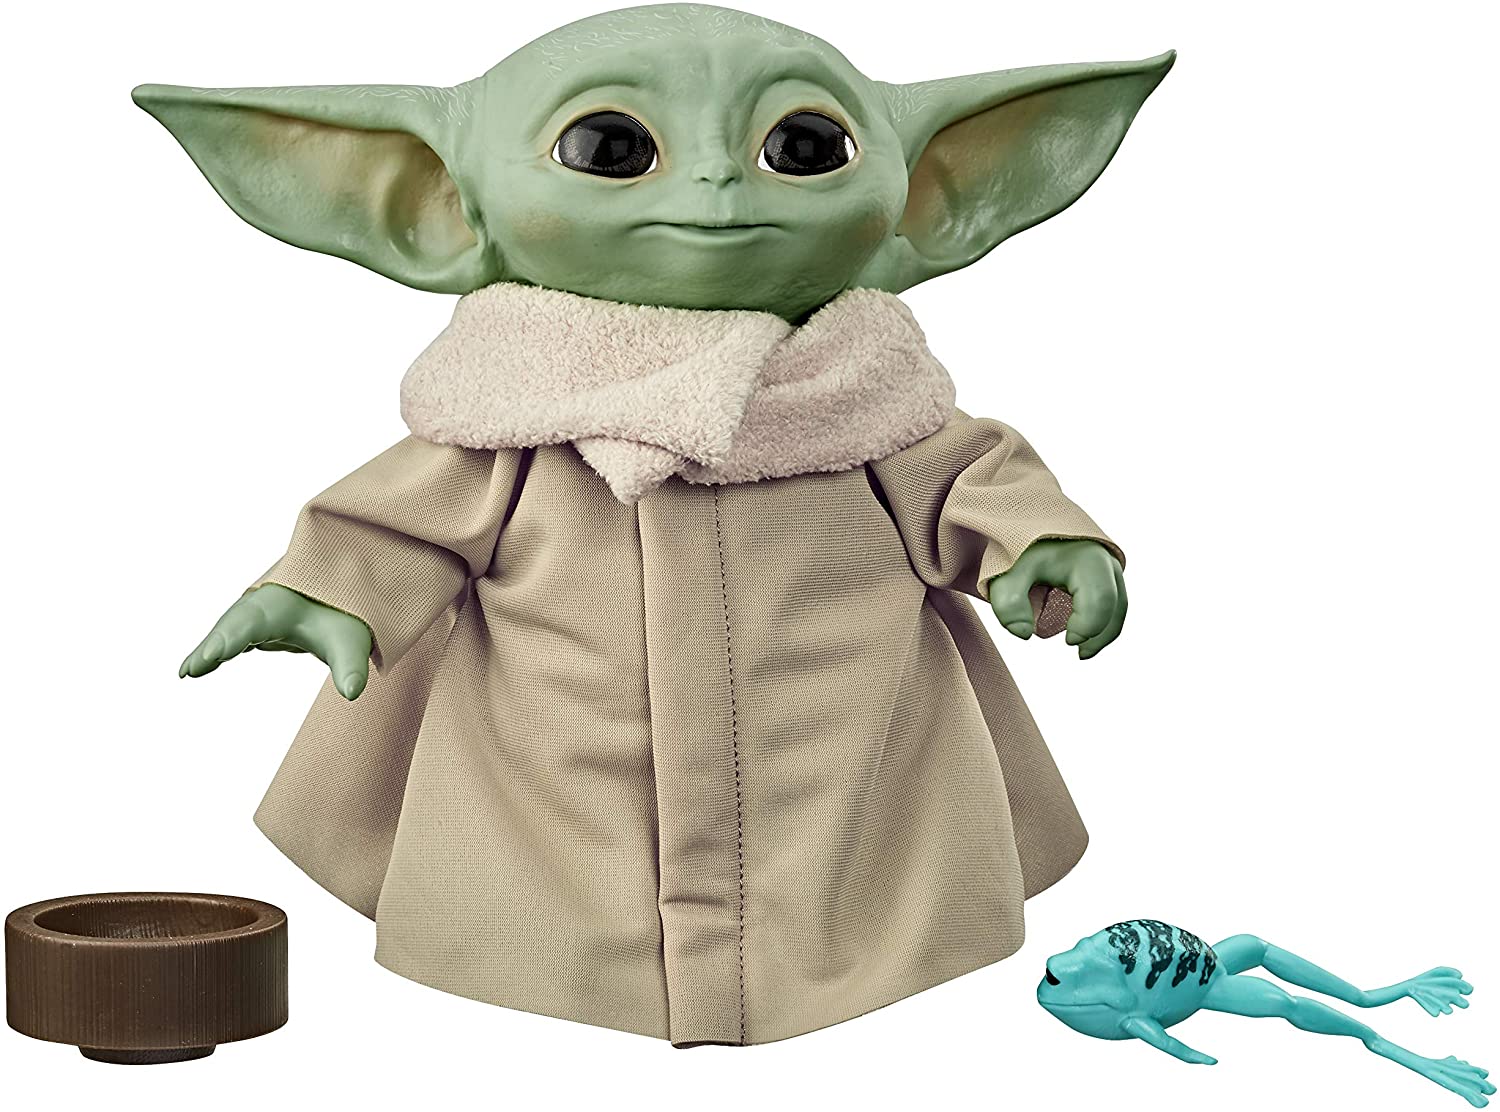 [Exclusivo Prime] Figura Star Wars The Child (Baby Yoda) Brinquedo De Pelúcia que Fala de 19,05cm Inspirado na Série The Mandalorian - F1115 - Hasbro